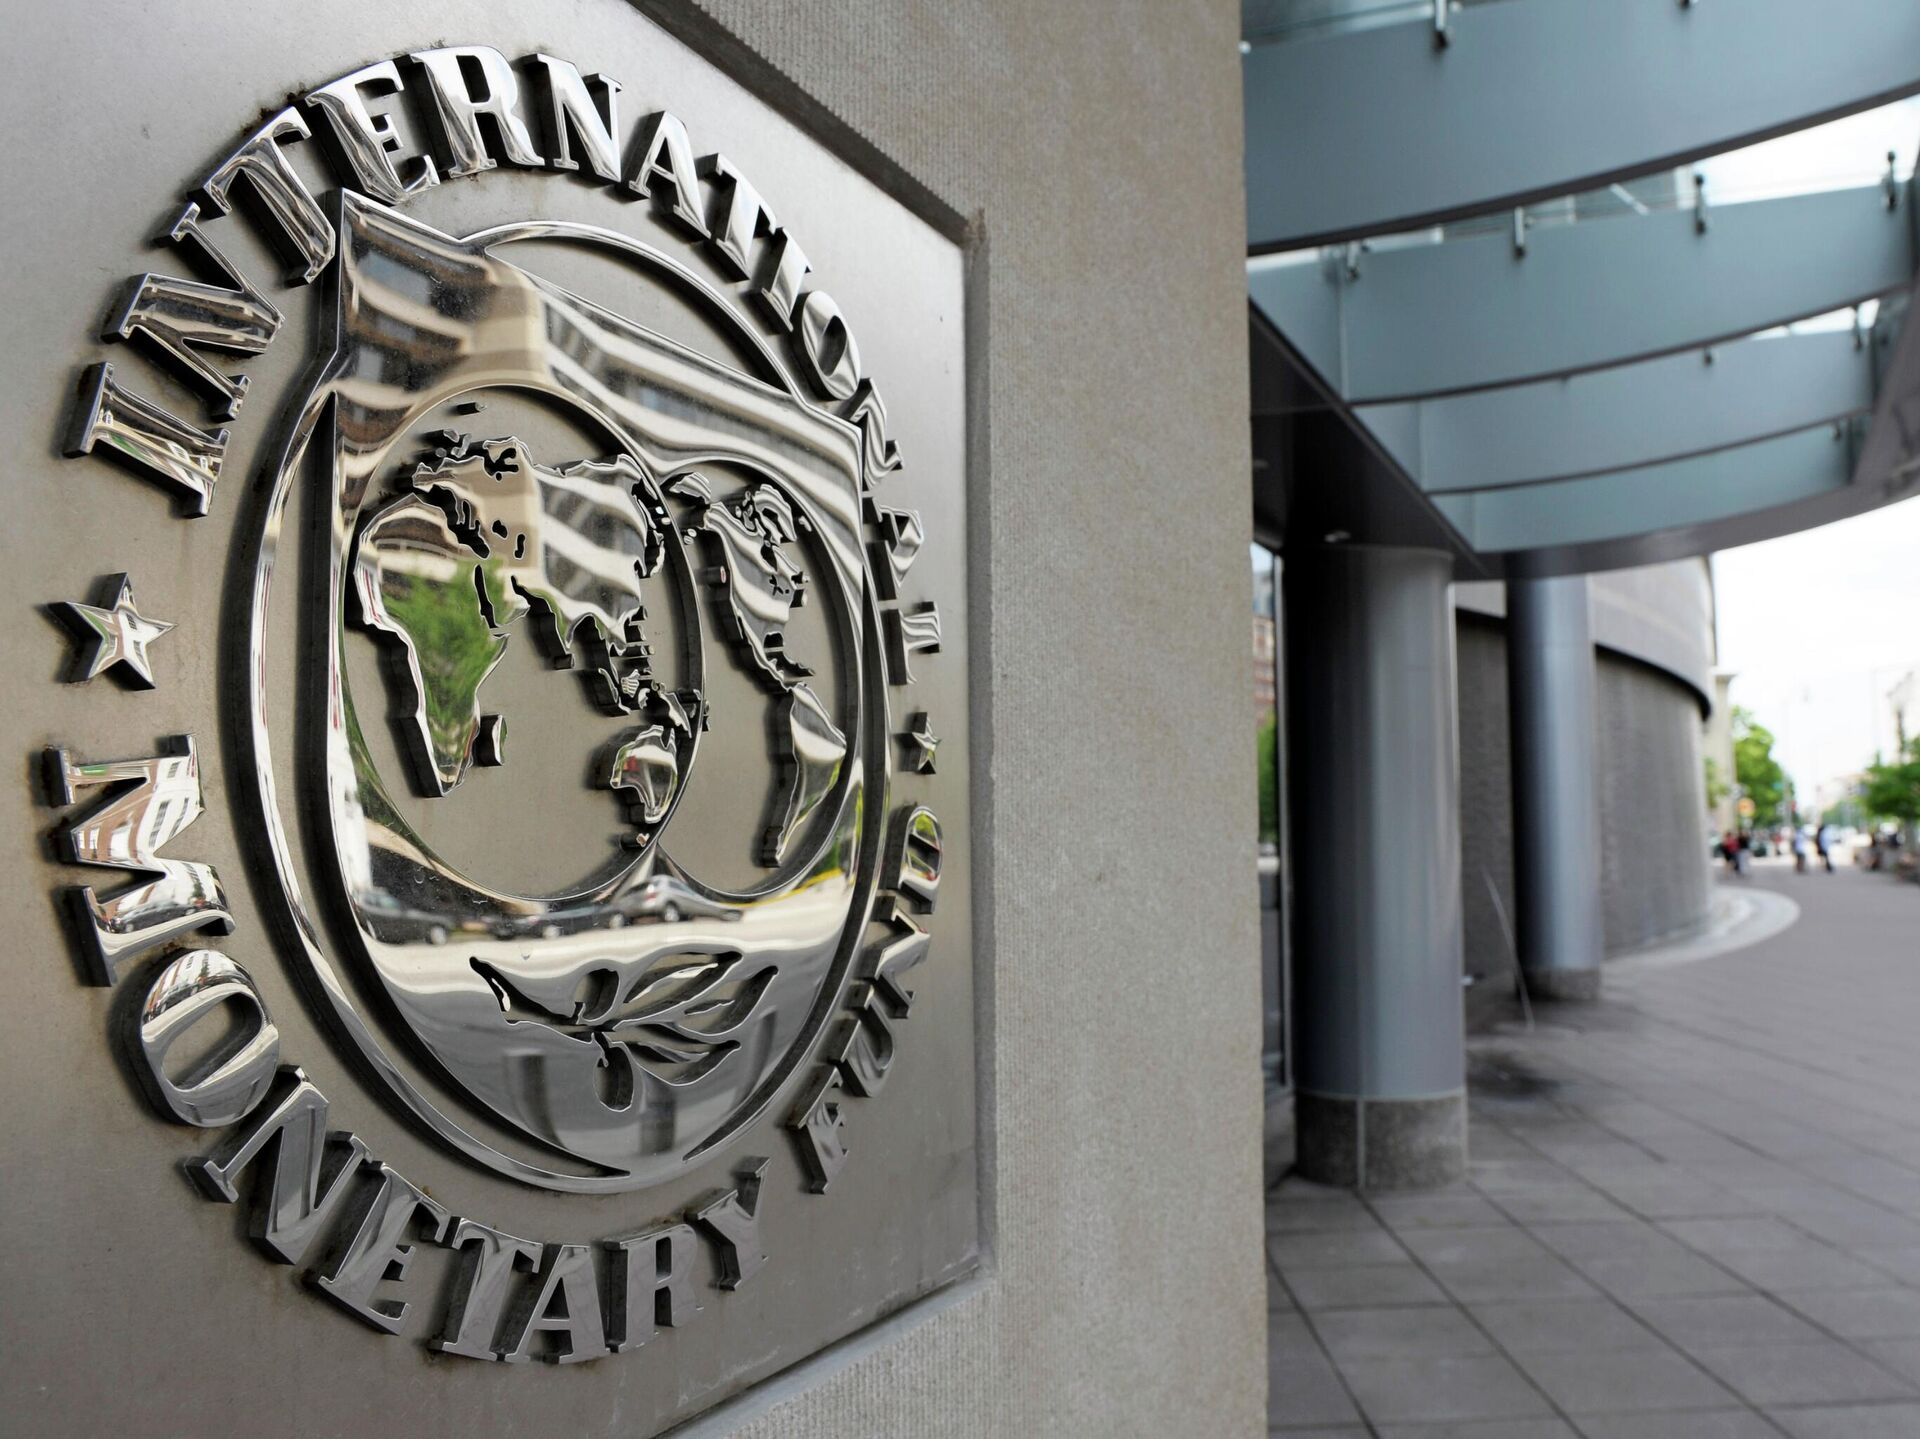 1 мвф. Международный валютный фонд, IMF. МВФ (Международный валютный фонд) здание. Штаб квартира МВФ В Вашингтоне. Международный валютный фонд (МВФ) фото.